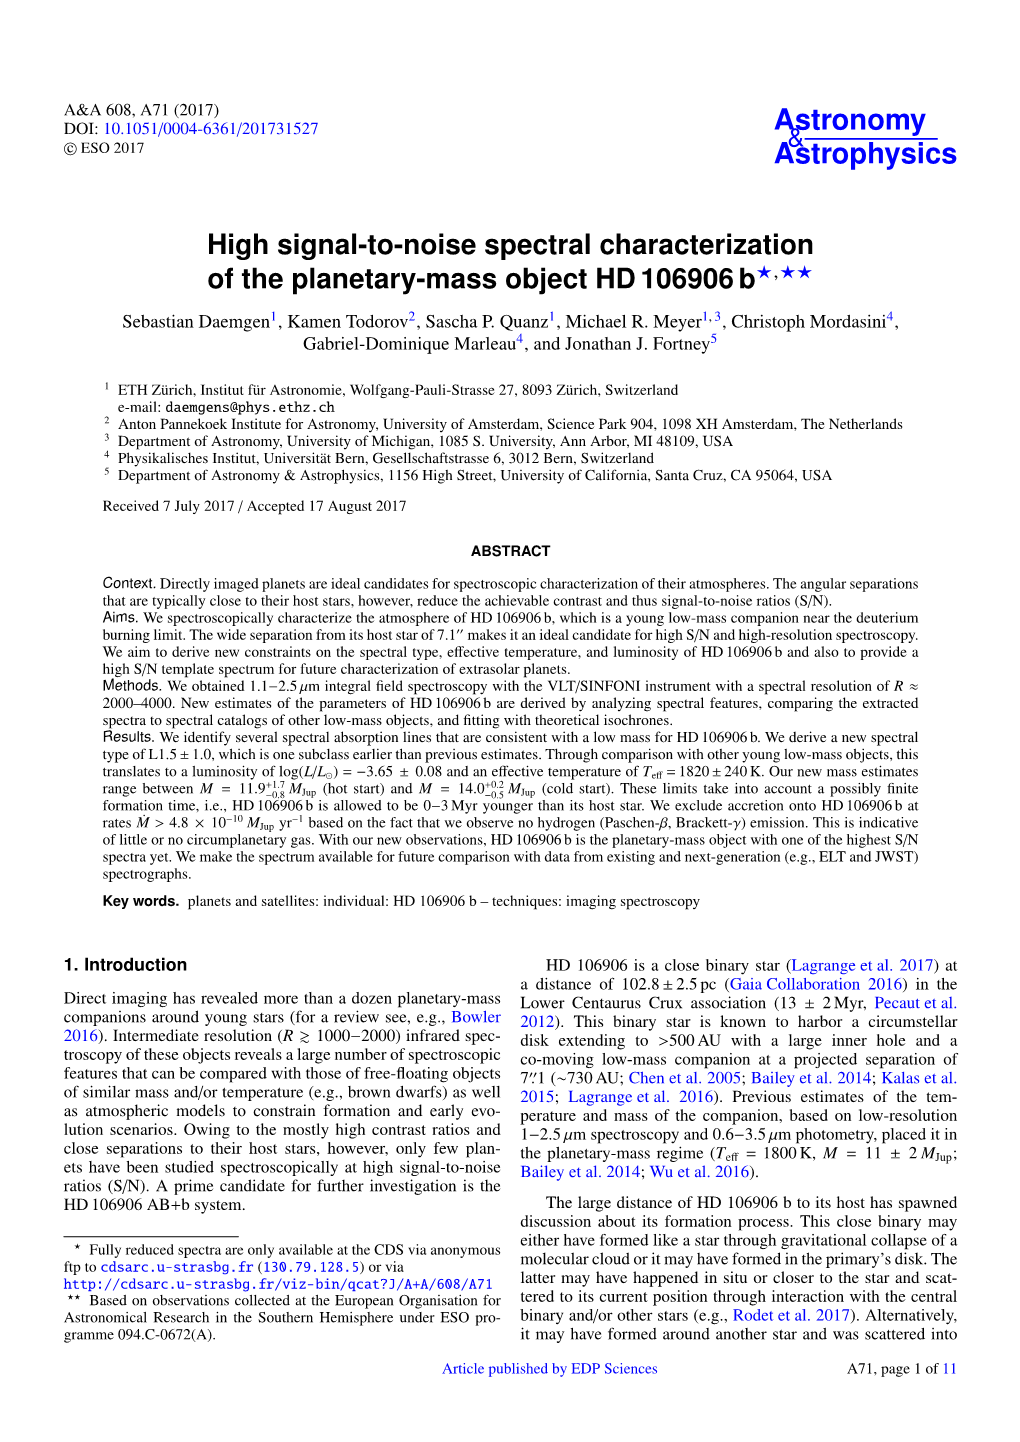 High Signal-To-Noise Spectral Characterization of the Planetary-Mass Object HD 106906 B?,?? Sebastian Daemgen1, Kamen Todorov2, Sascha P